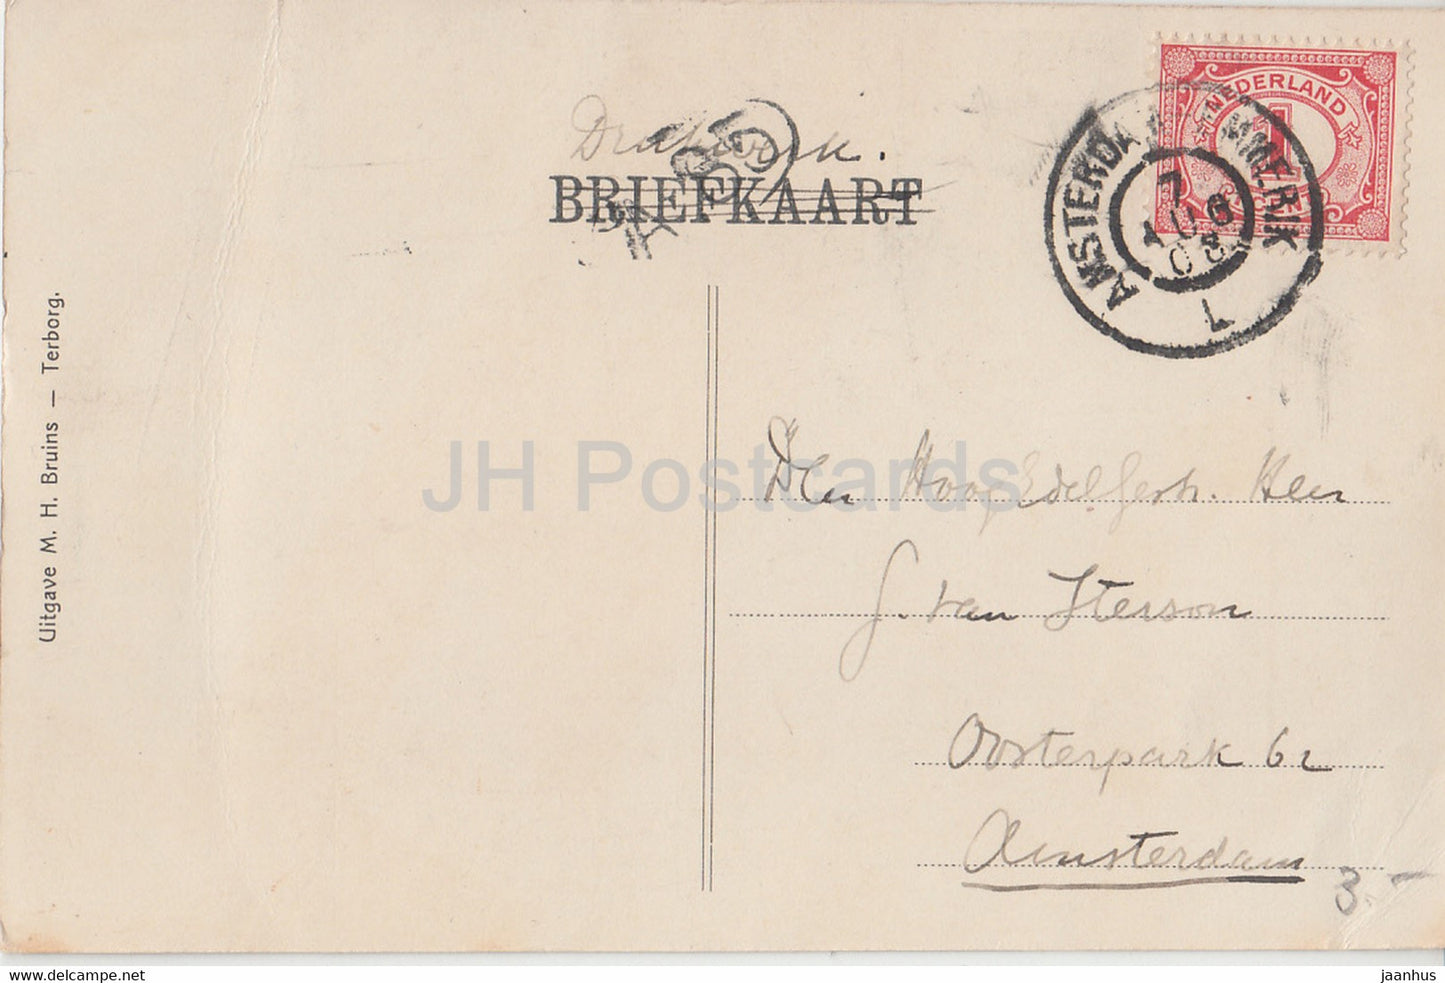 Mollekolk - Groet uit Terborg - MH Bruins - carte postale ancienne - 1908 - Pays-Bas - utilisé